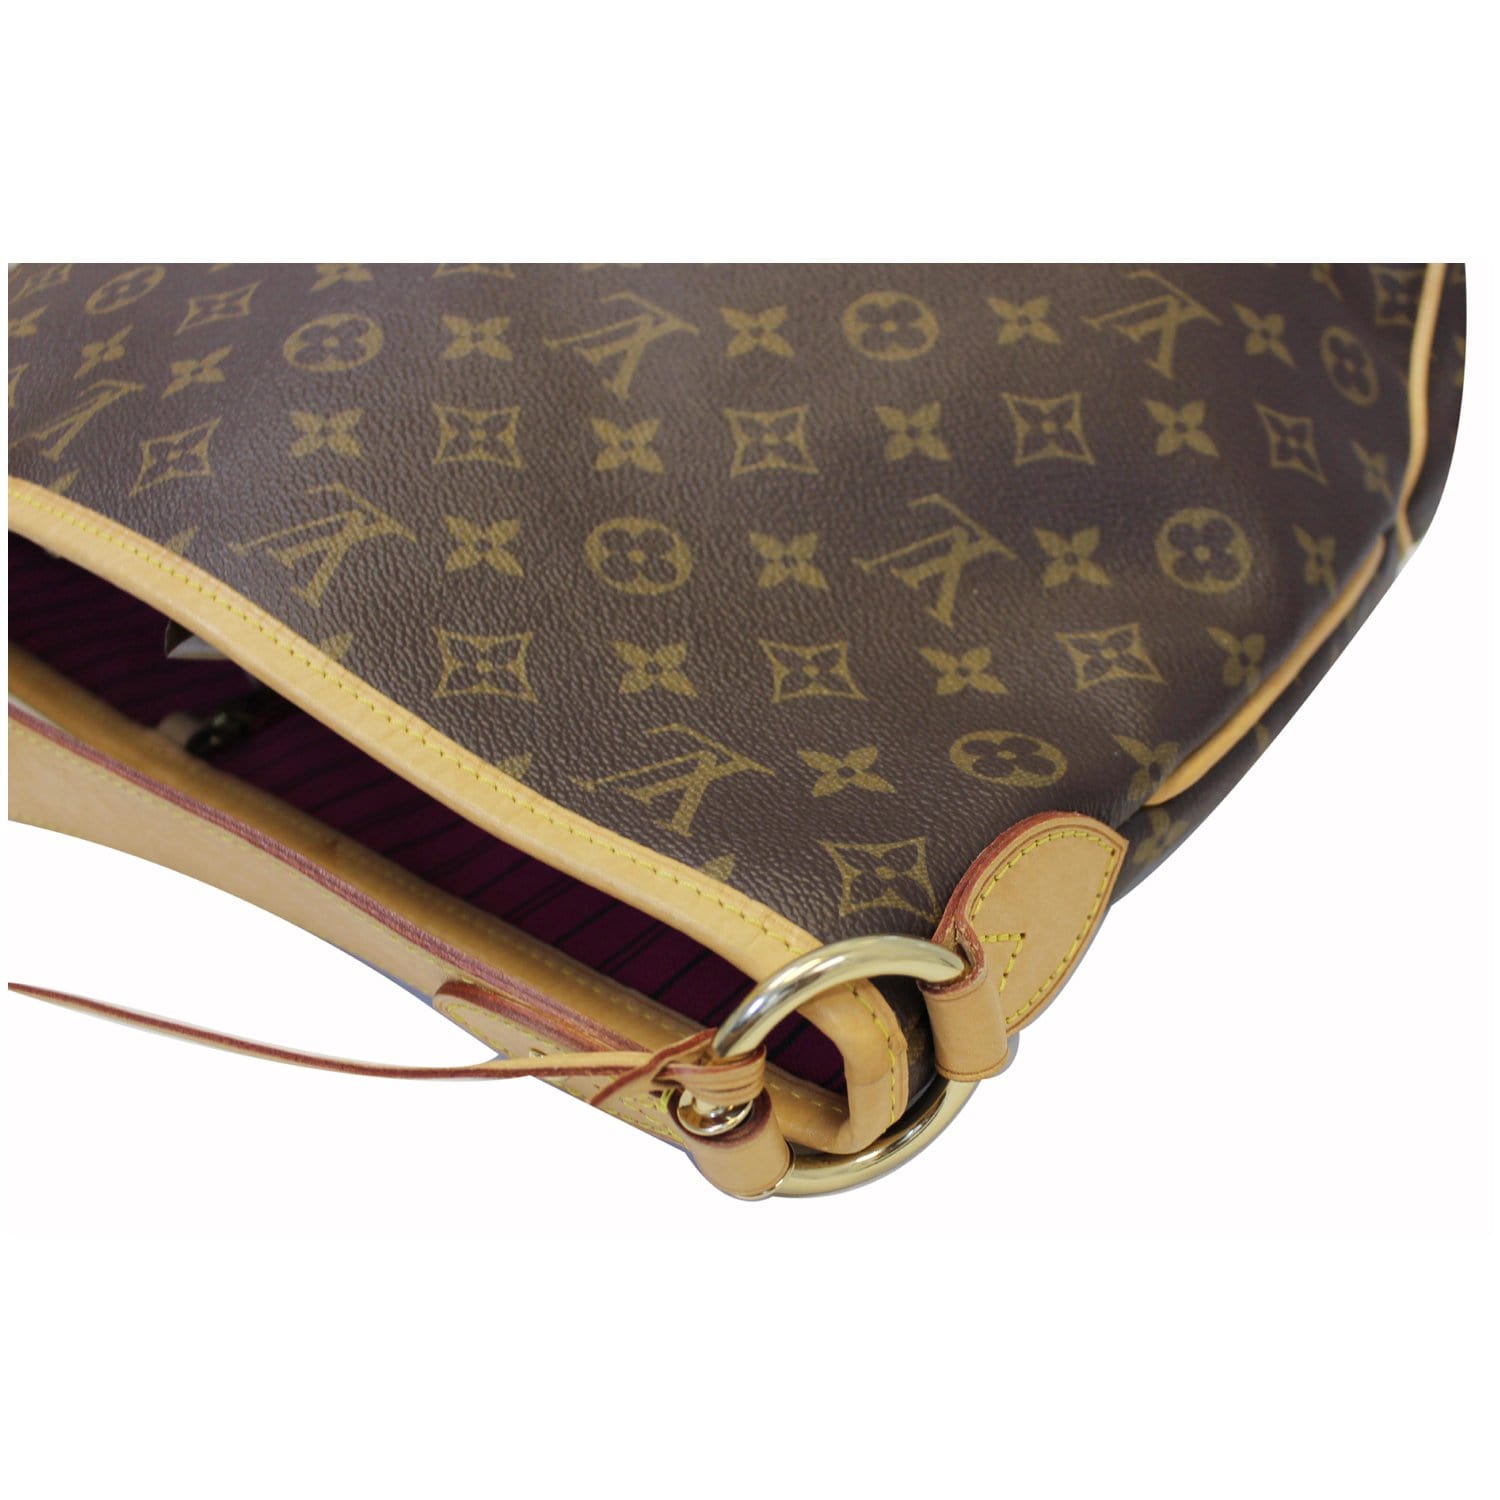 Louis Vuitton Brown Monogram Canvas MM Delightful Shoulder Bag